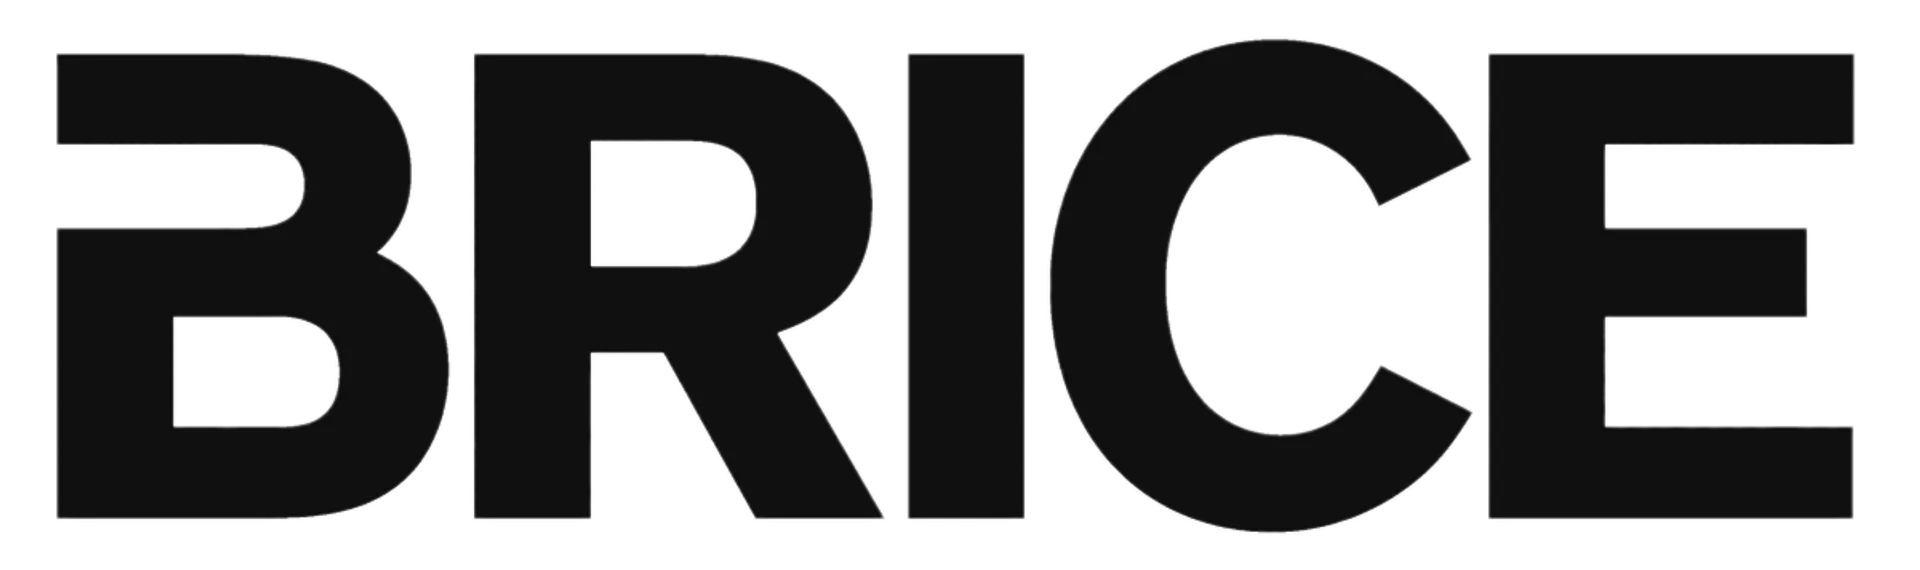 BRICE logo du catalogue